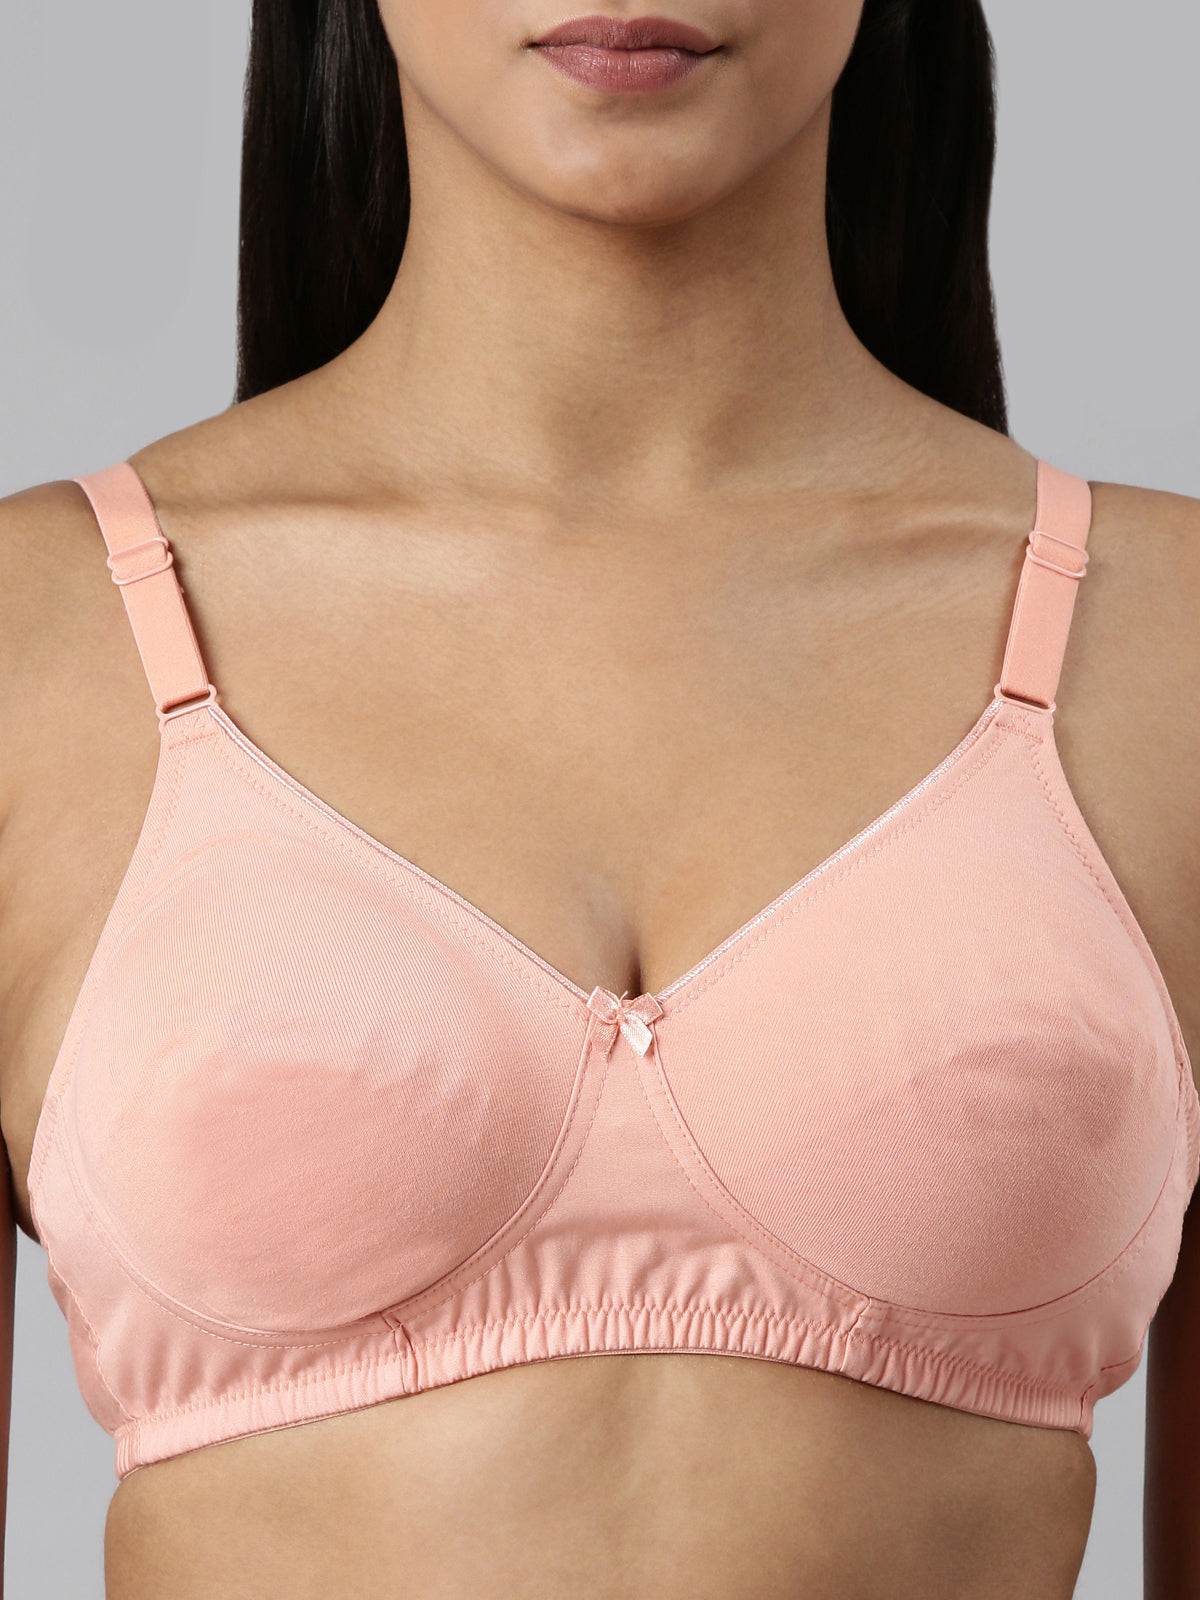 blossom-ethnic bra-peach2-woven cotton-everyday bra